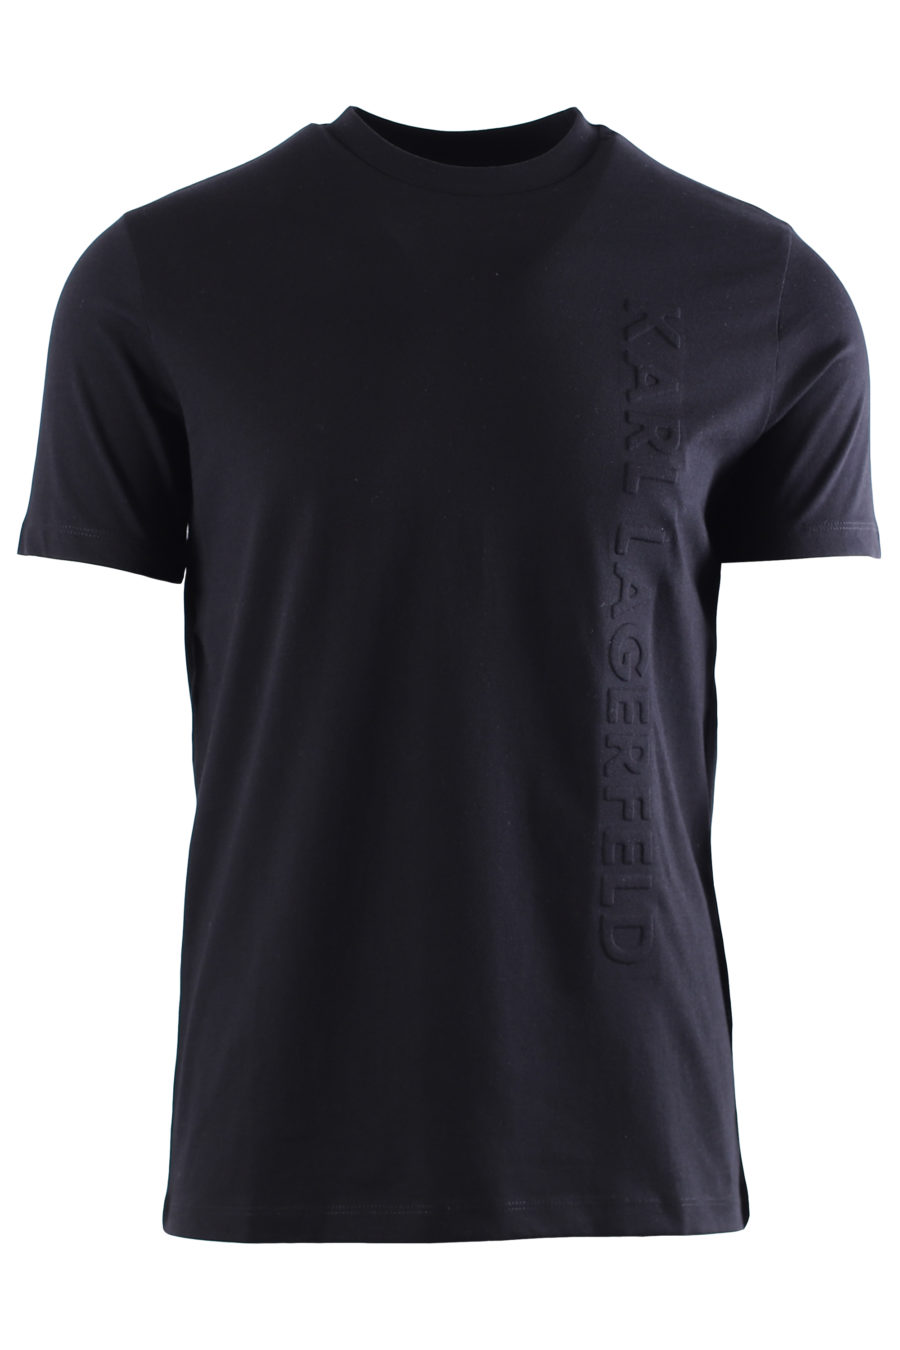 Camiseta negra con logotipo lateral en relieve - IMG 0570